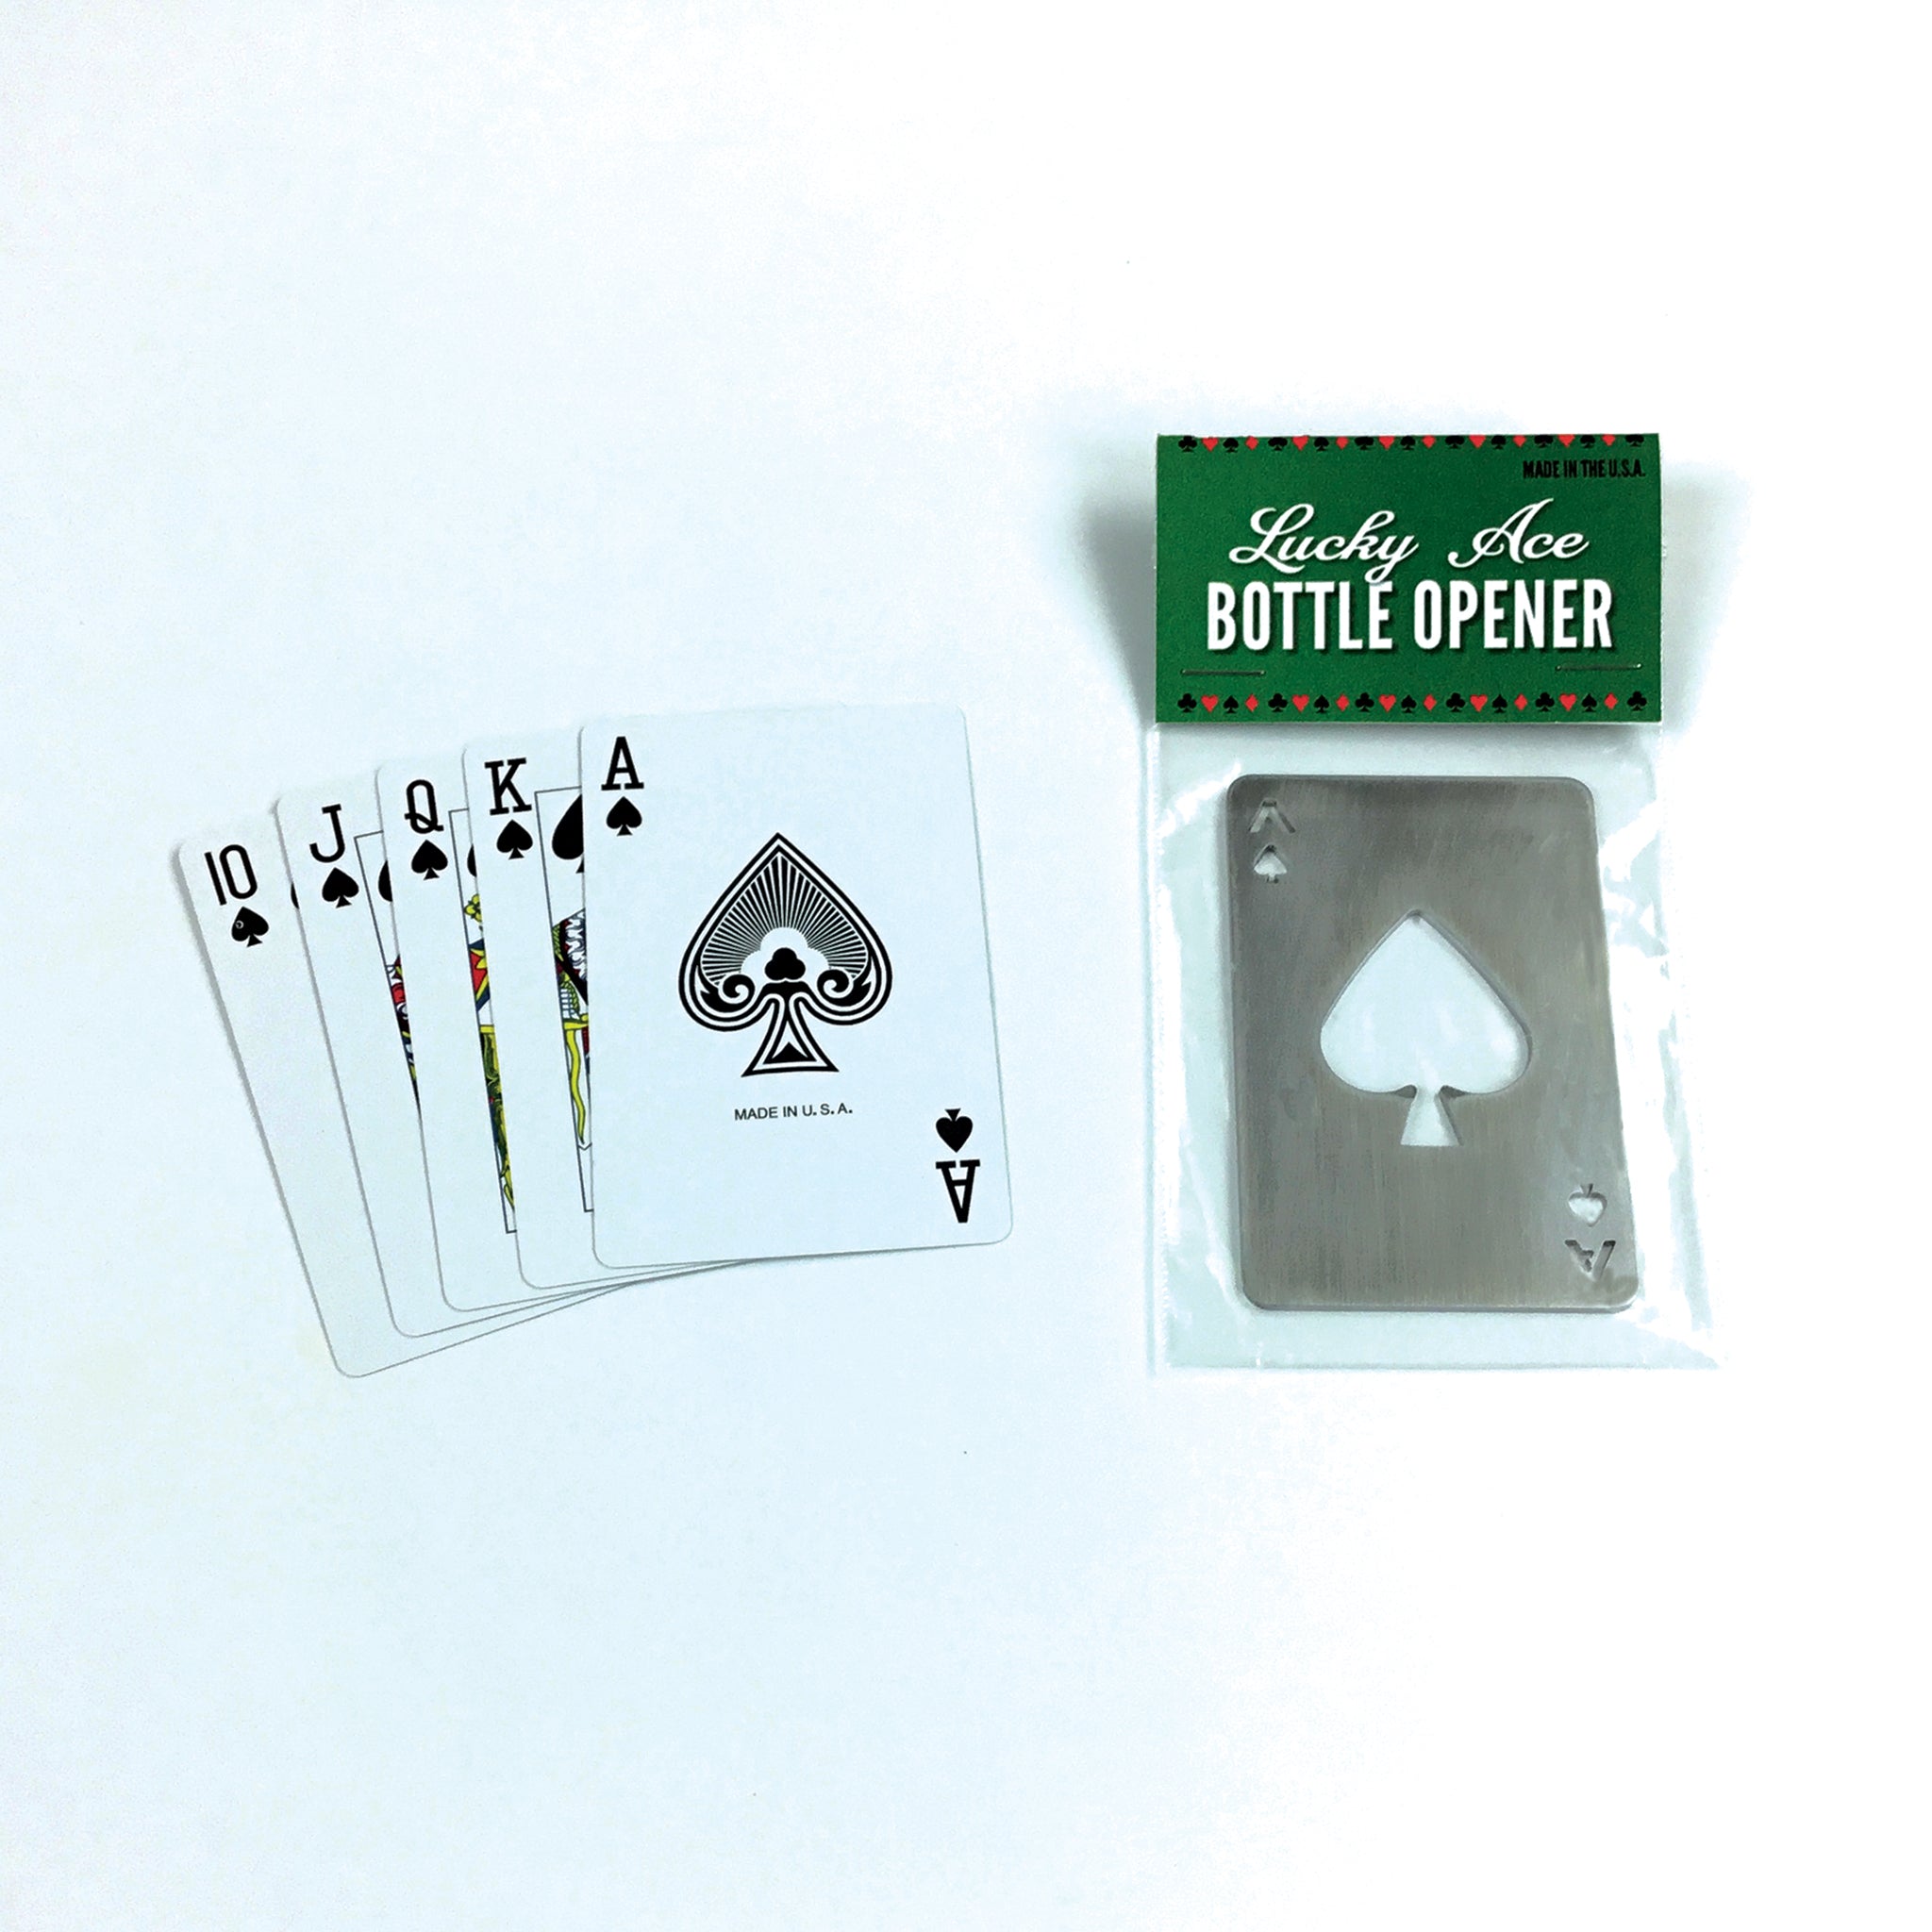 Ace of Spades Bottle Opener